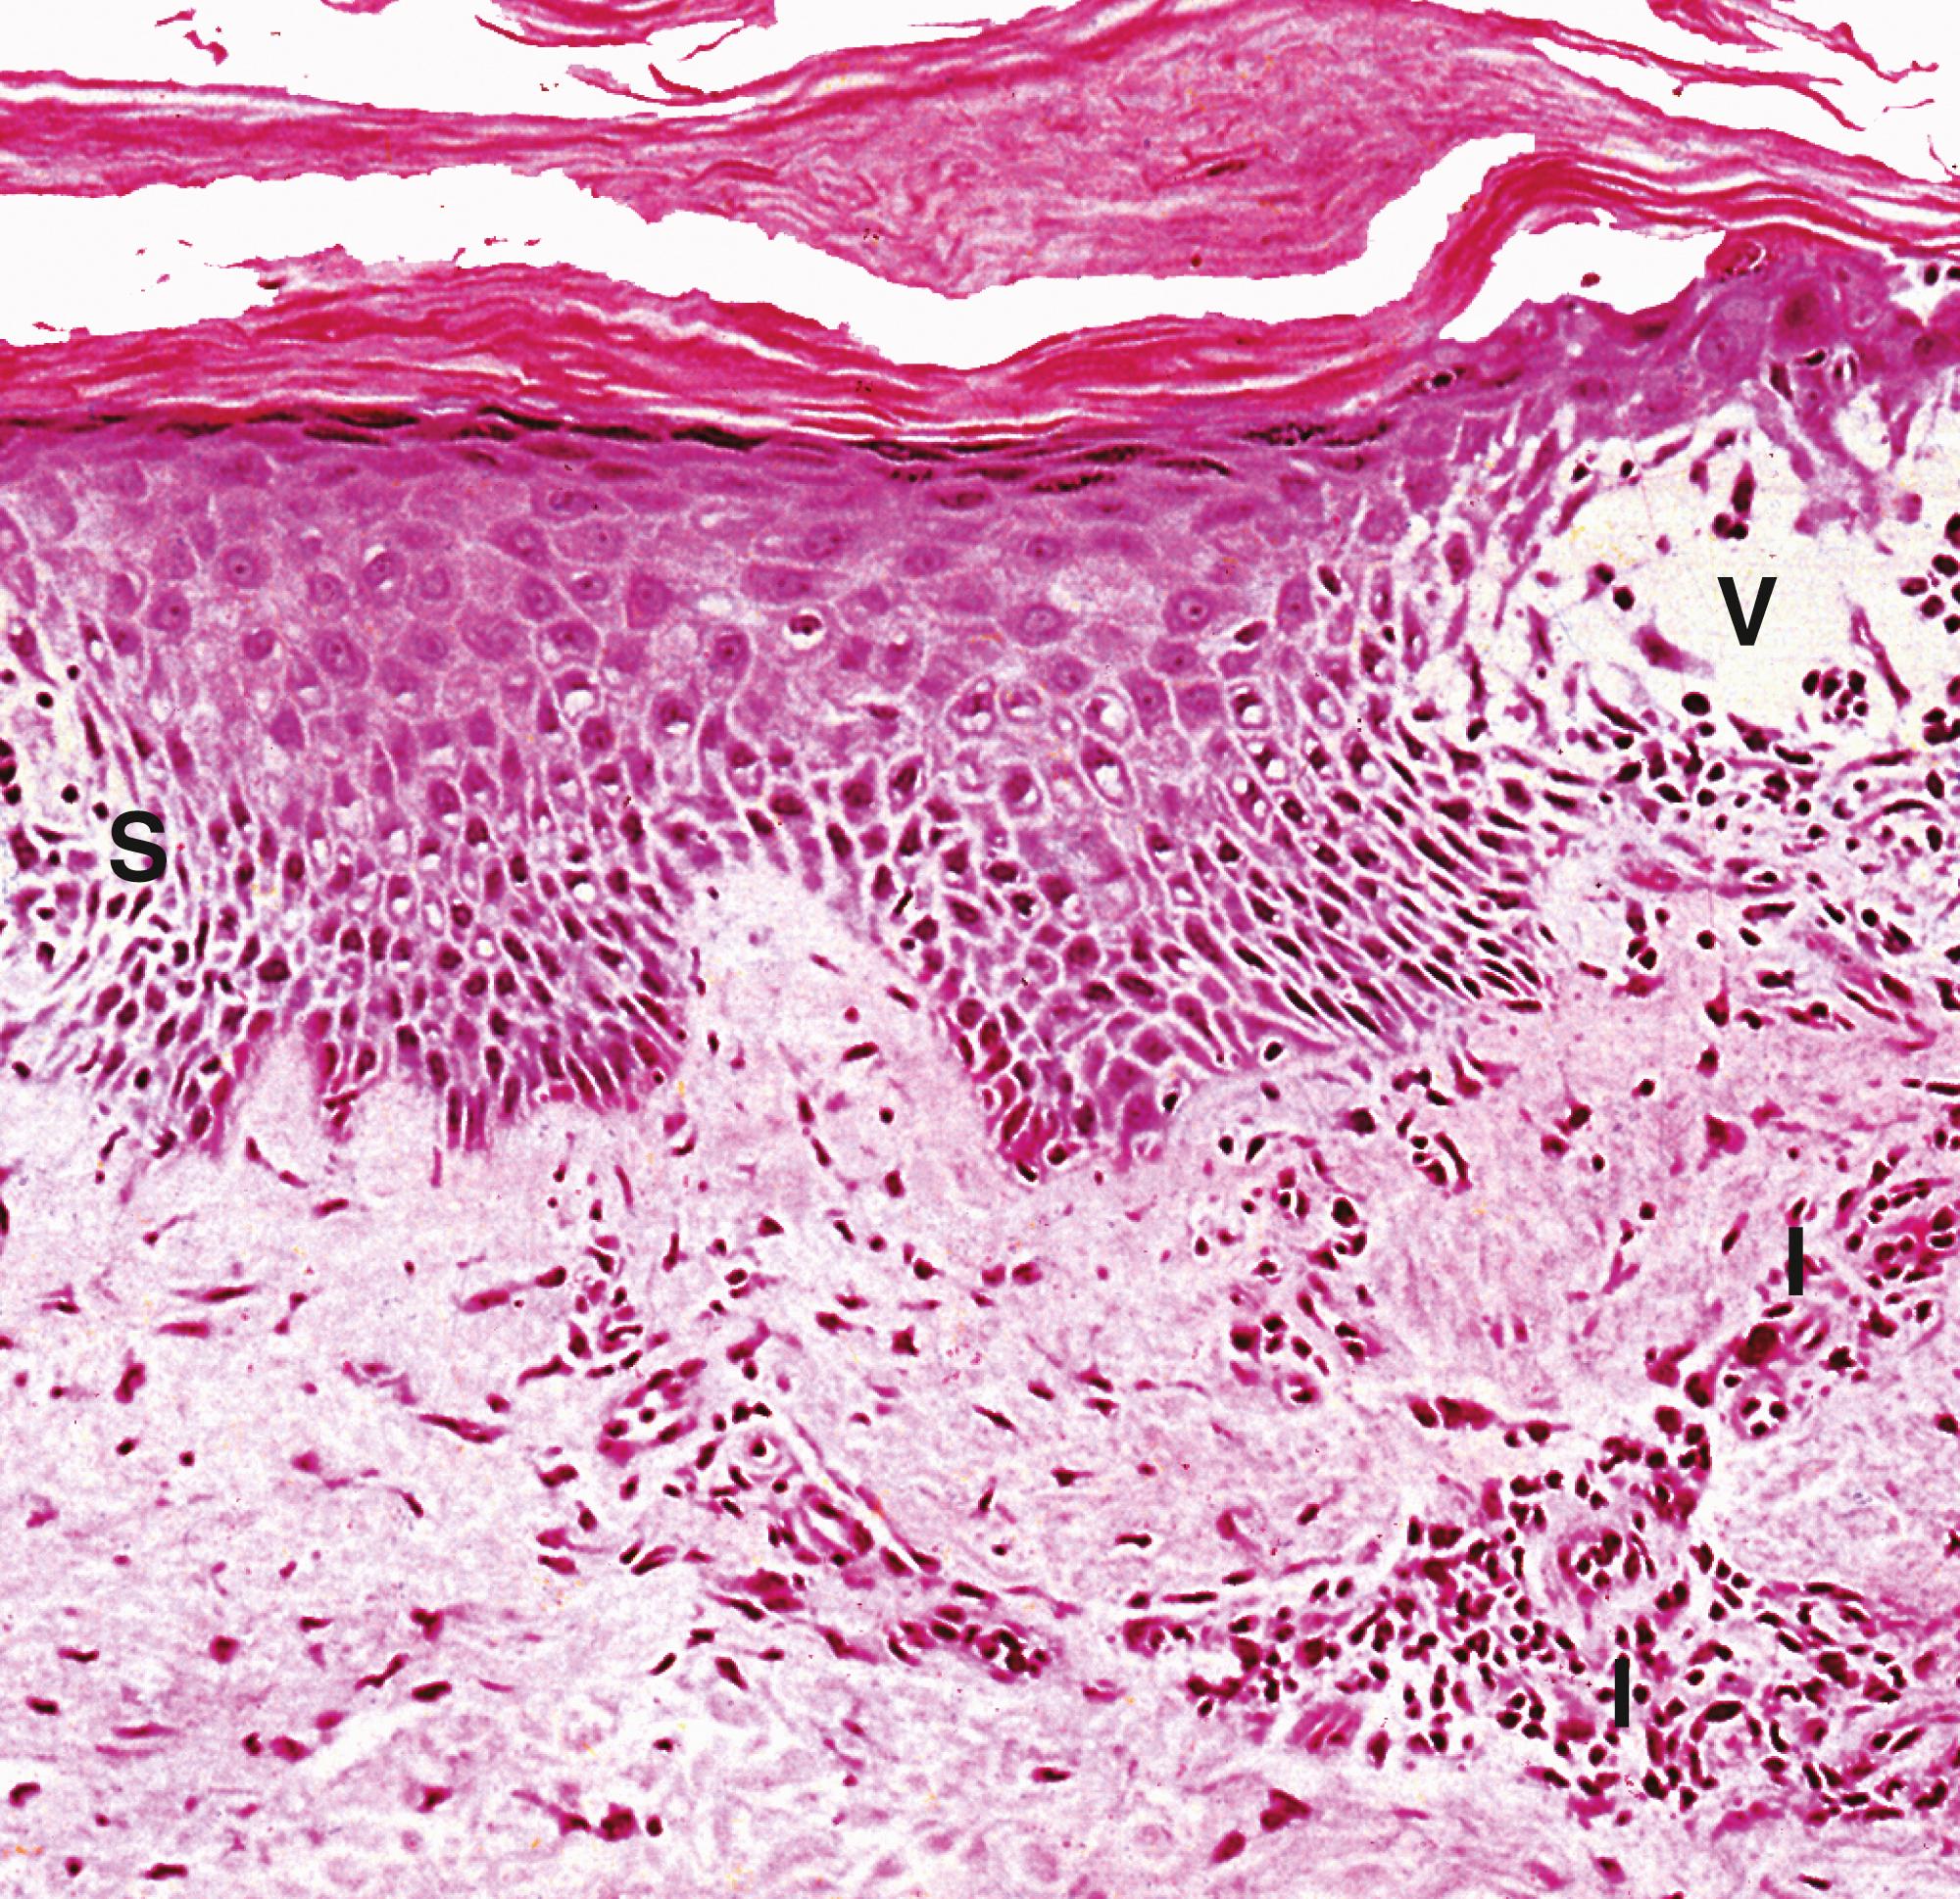 Fig. 21.5, Acute dermatitis (MP).